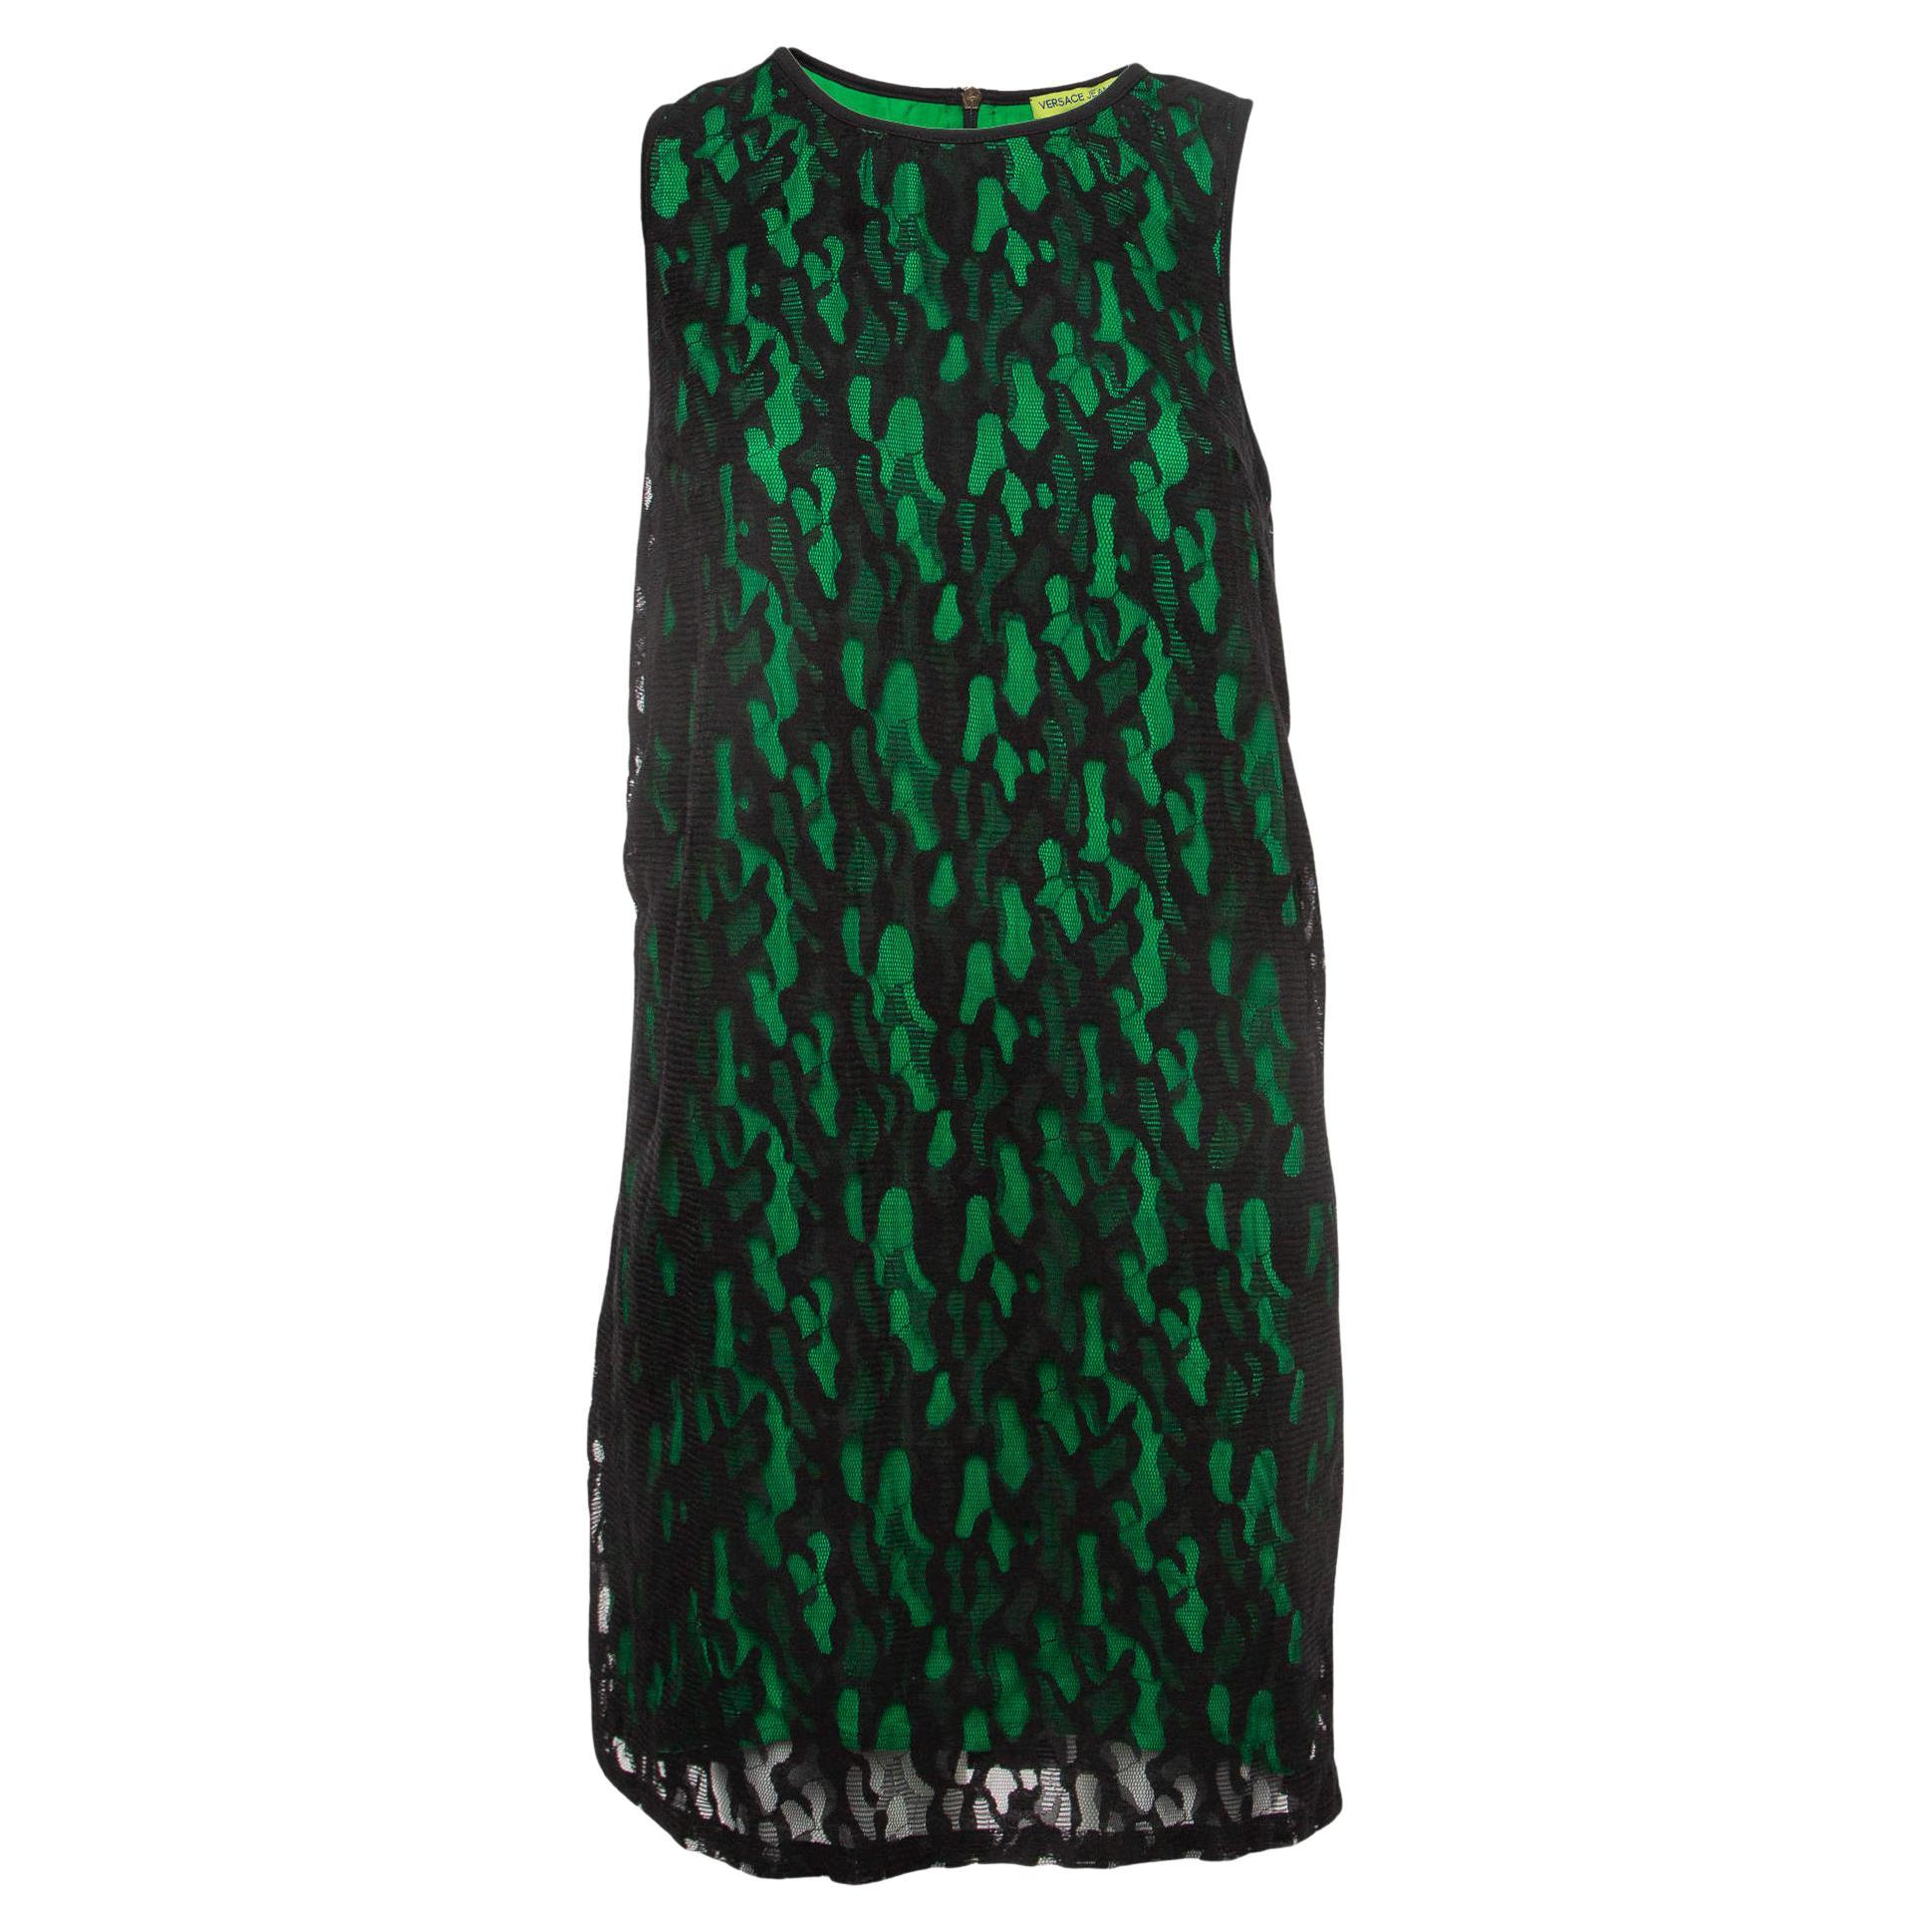 Versace Jeans Black/Green Lace Overlay Sleeveless Short Dress M en vente